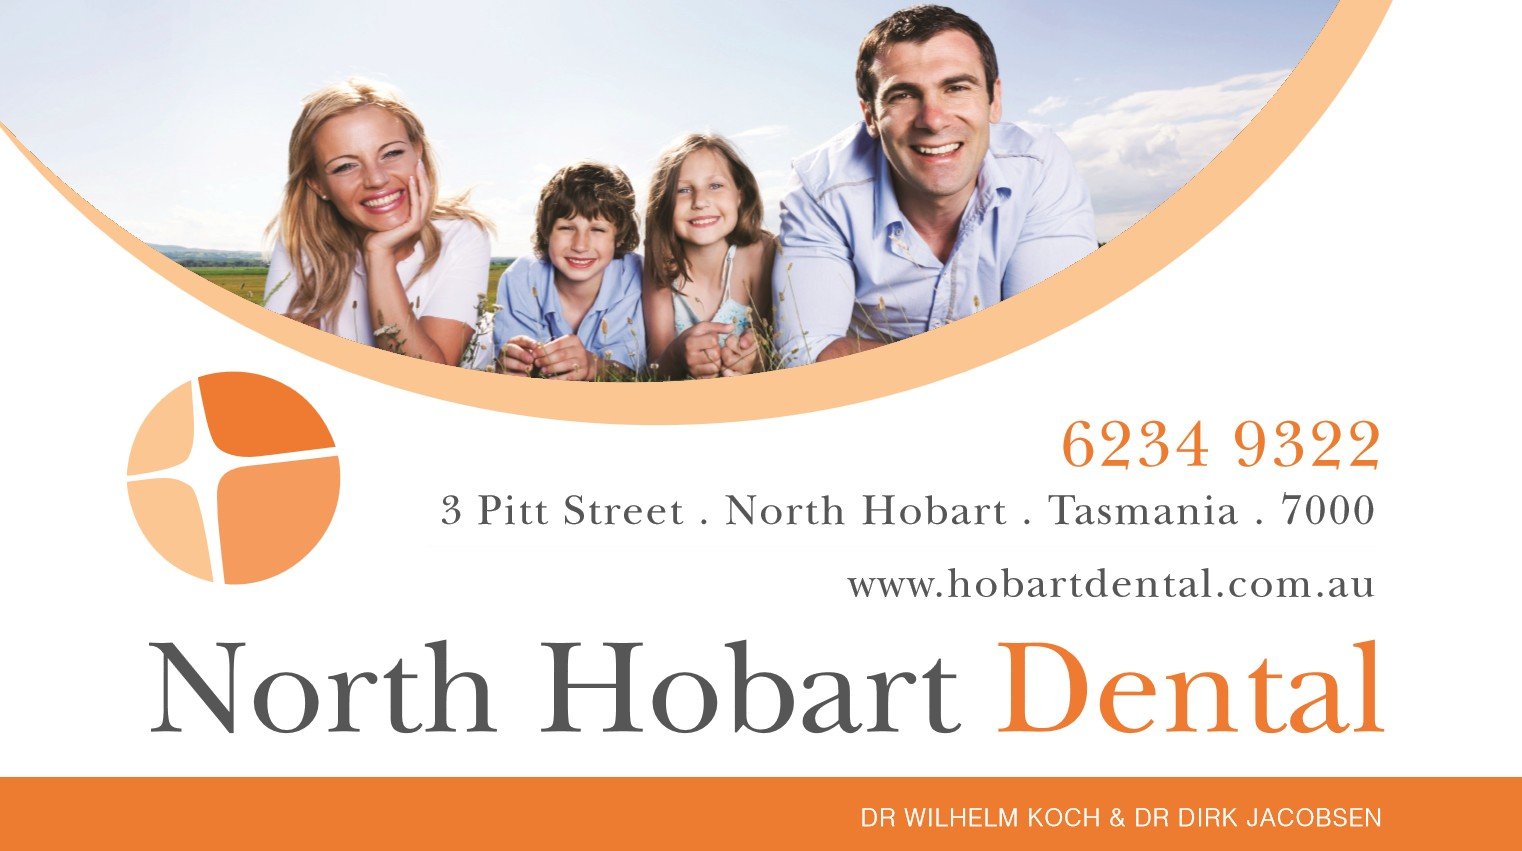 North Hobart Dental - Dentists Australia